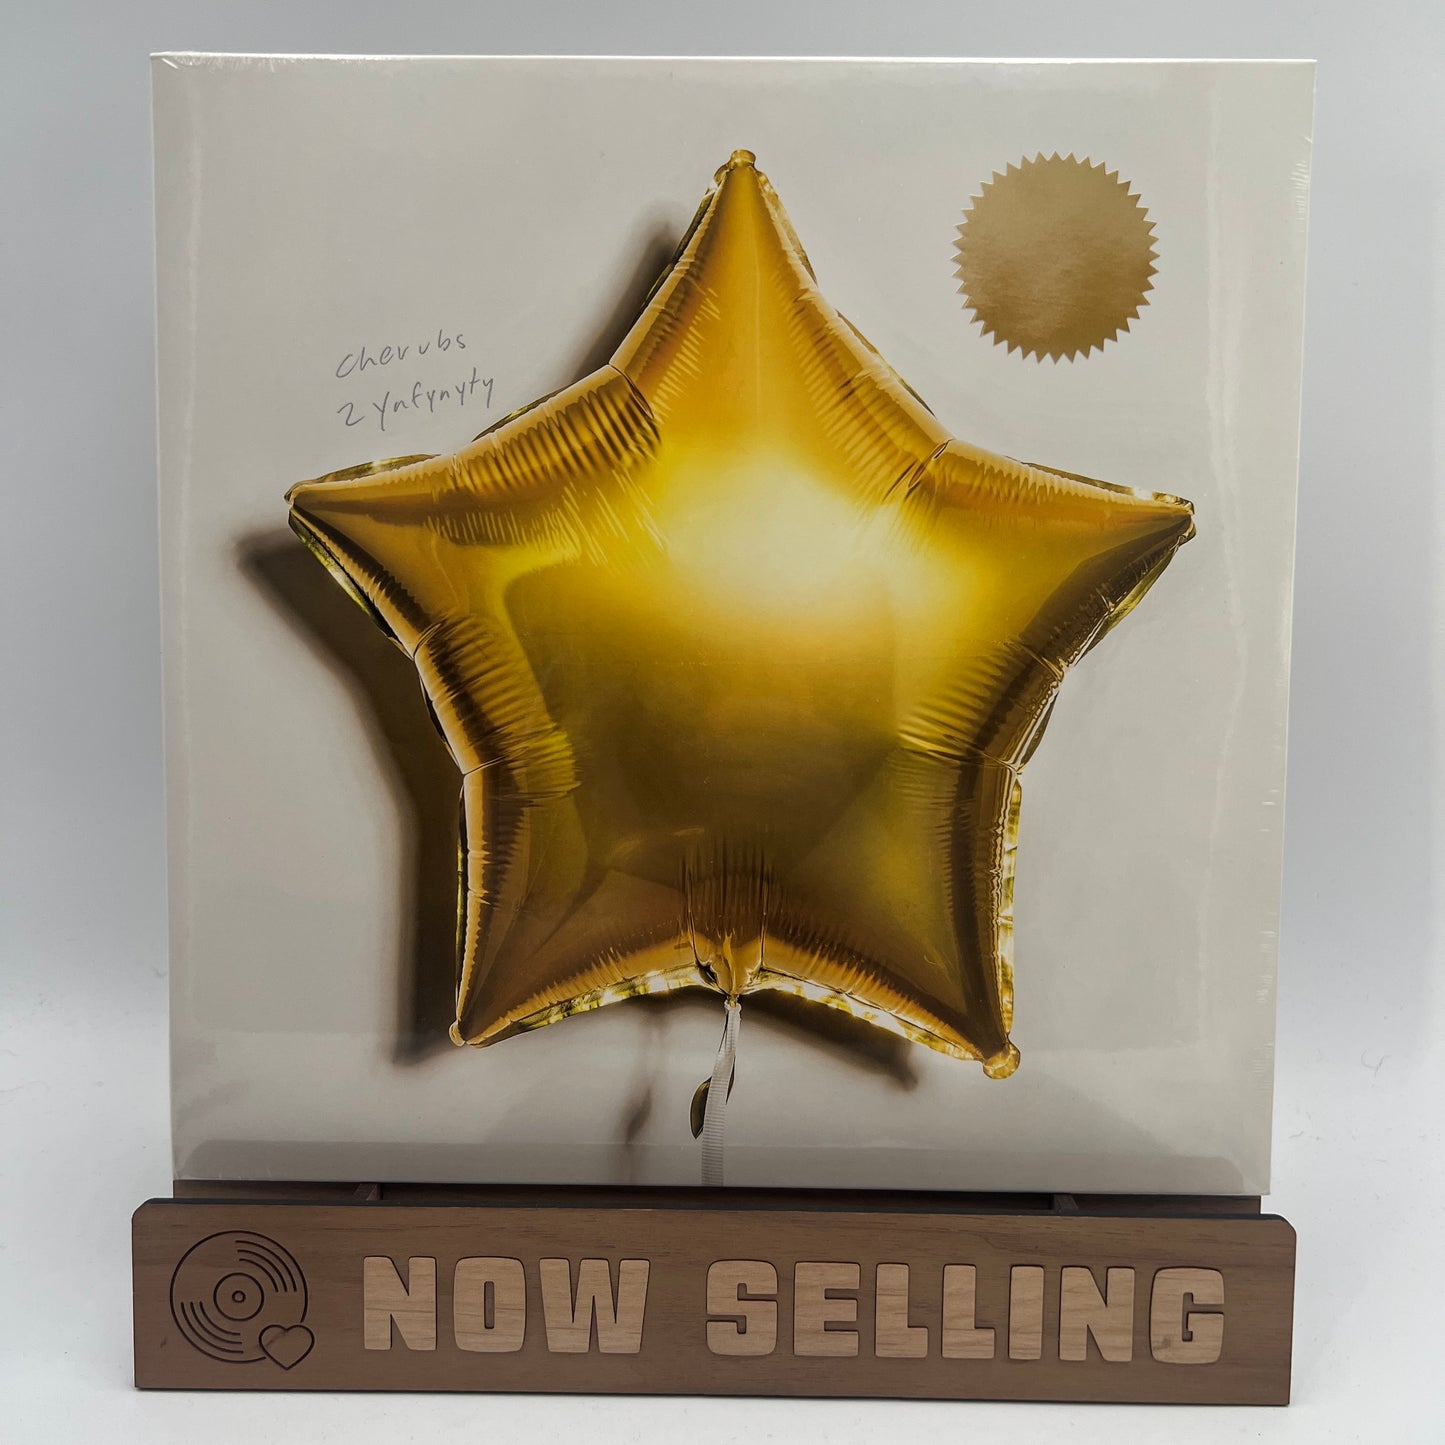 Cherubs - 2 Ynfynyty Vinyl LP SEALED Gold Nugget